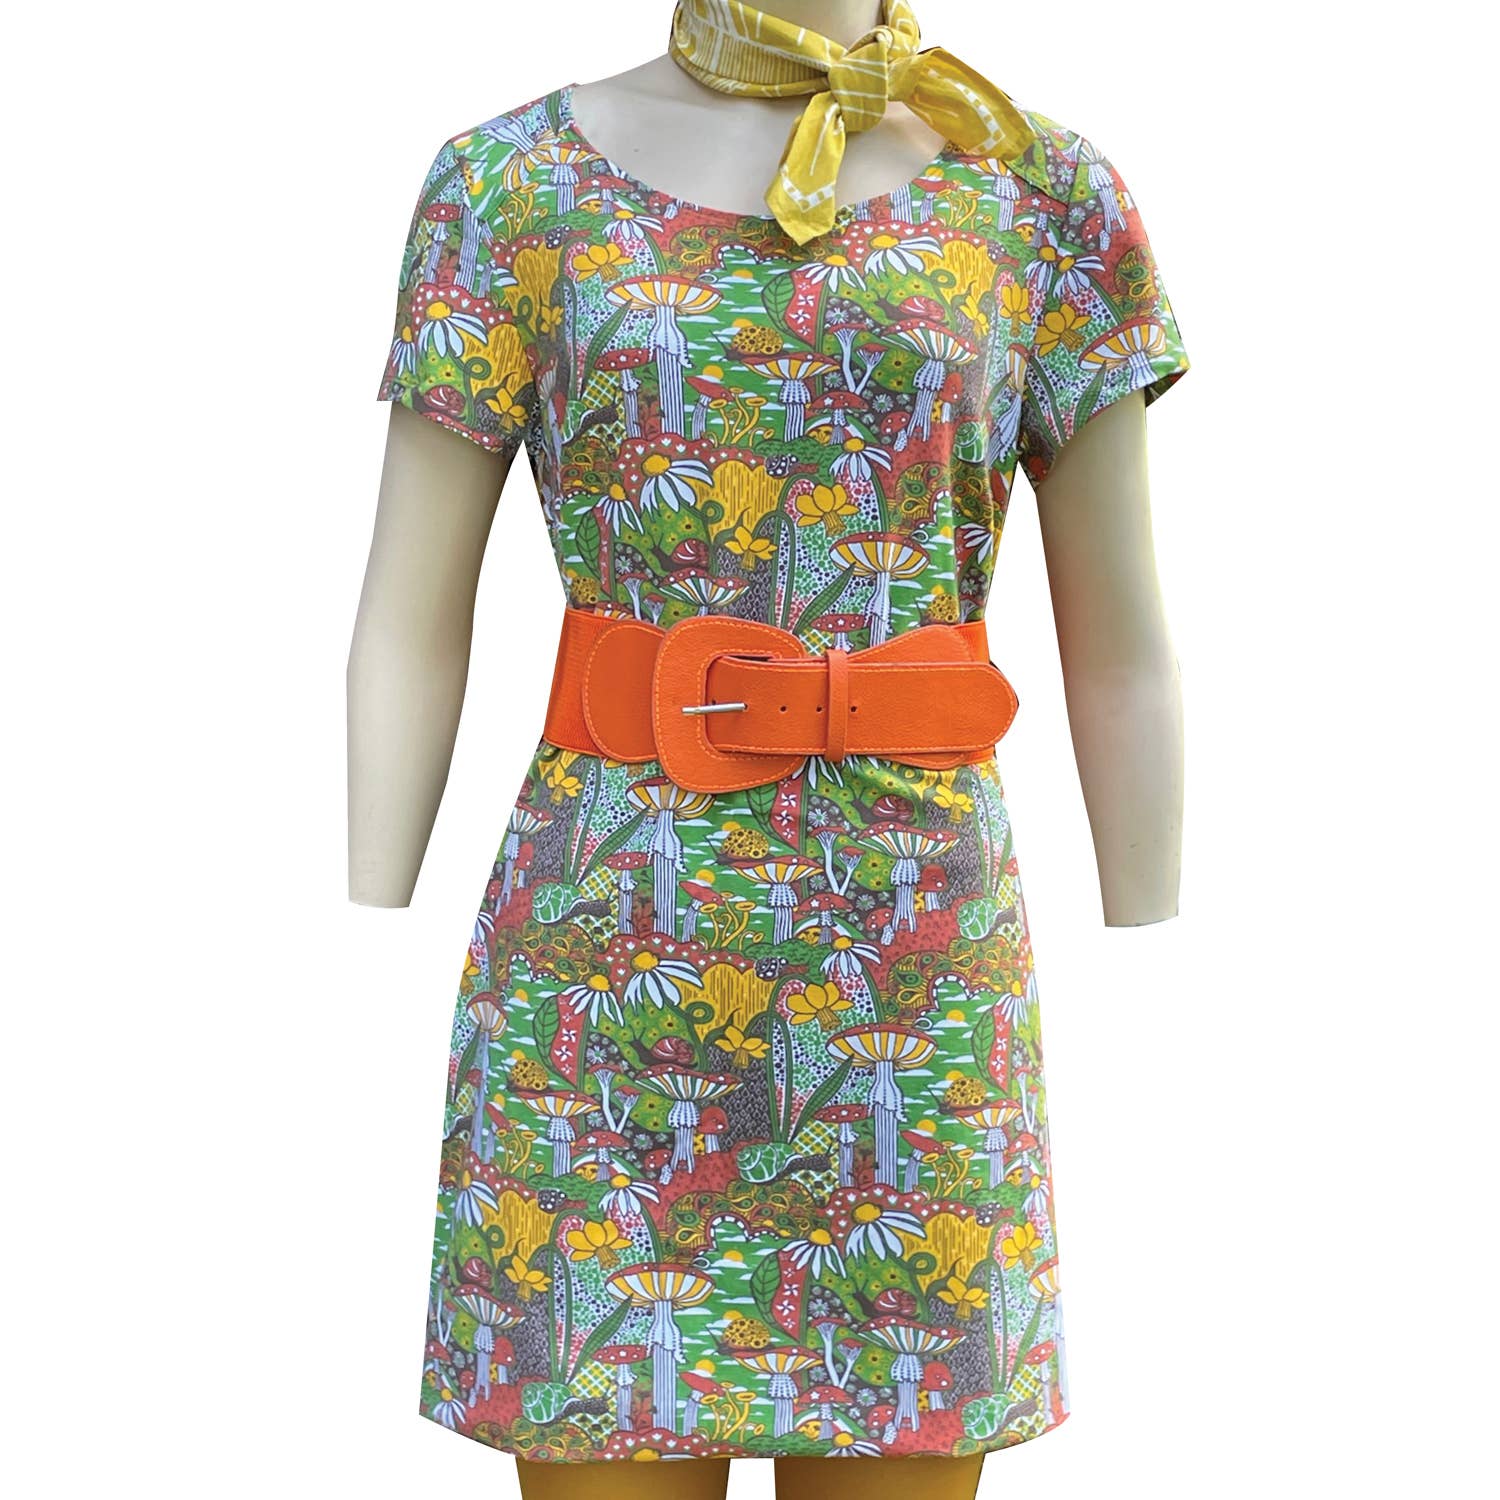 Groovy Mushroom & Snail Pocket A-Line Tunic Dress in Olive | Retro 60s-70s Inspired [L-2X]